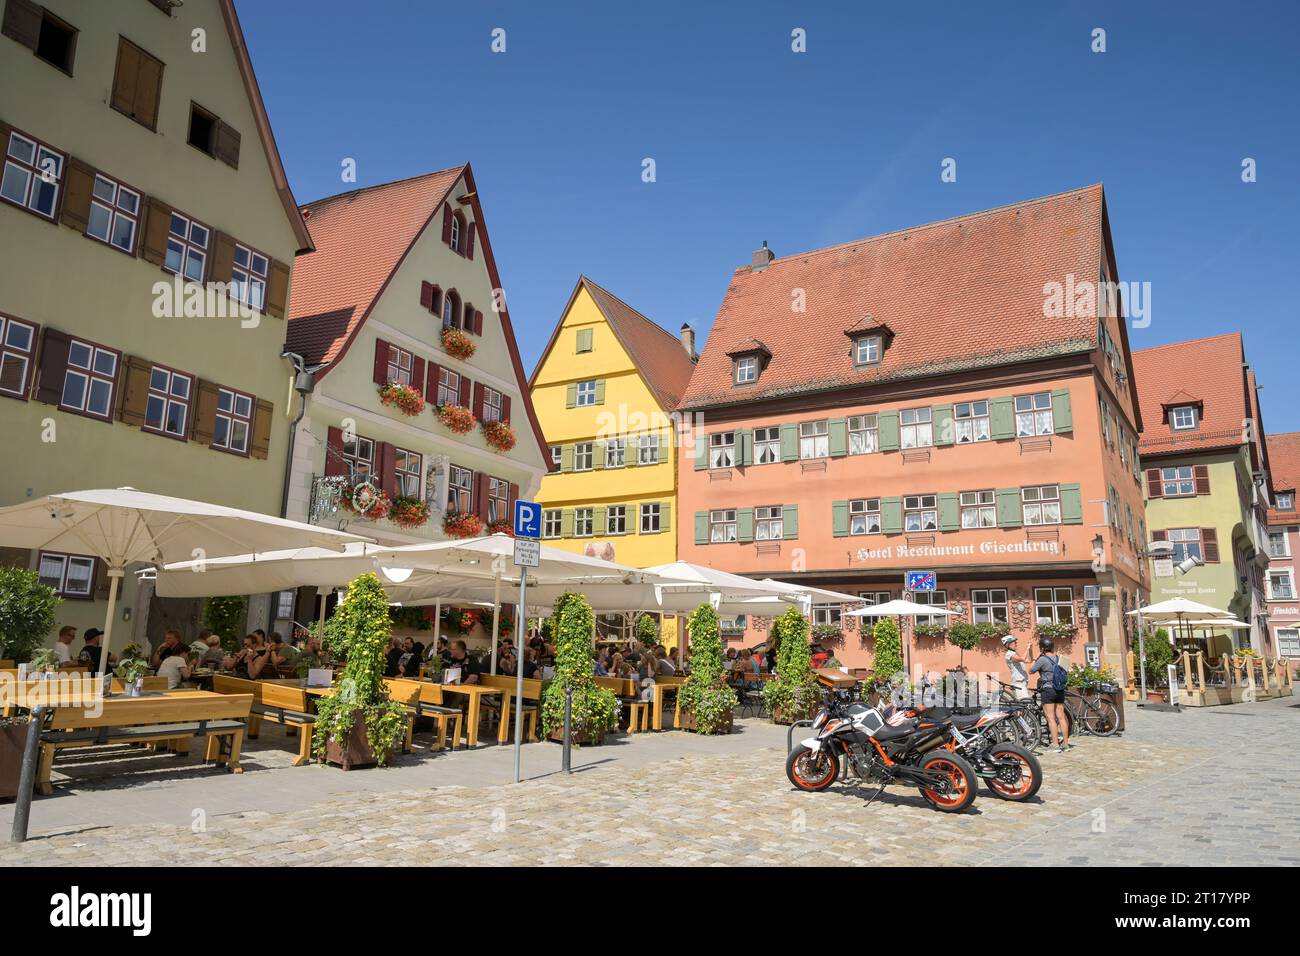 Altbauten, Weinmarkt, Altstadt, Dinkelsbühl, Franken, Bayern, Deutschland Banque D'Images